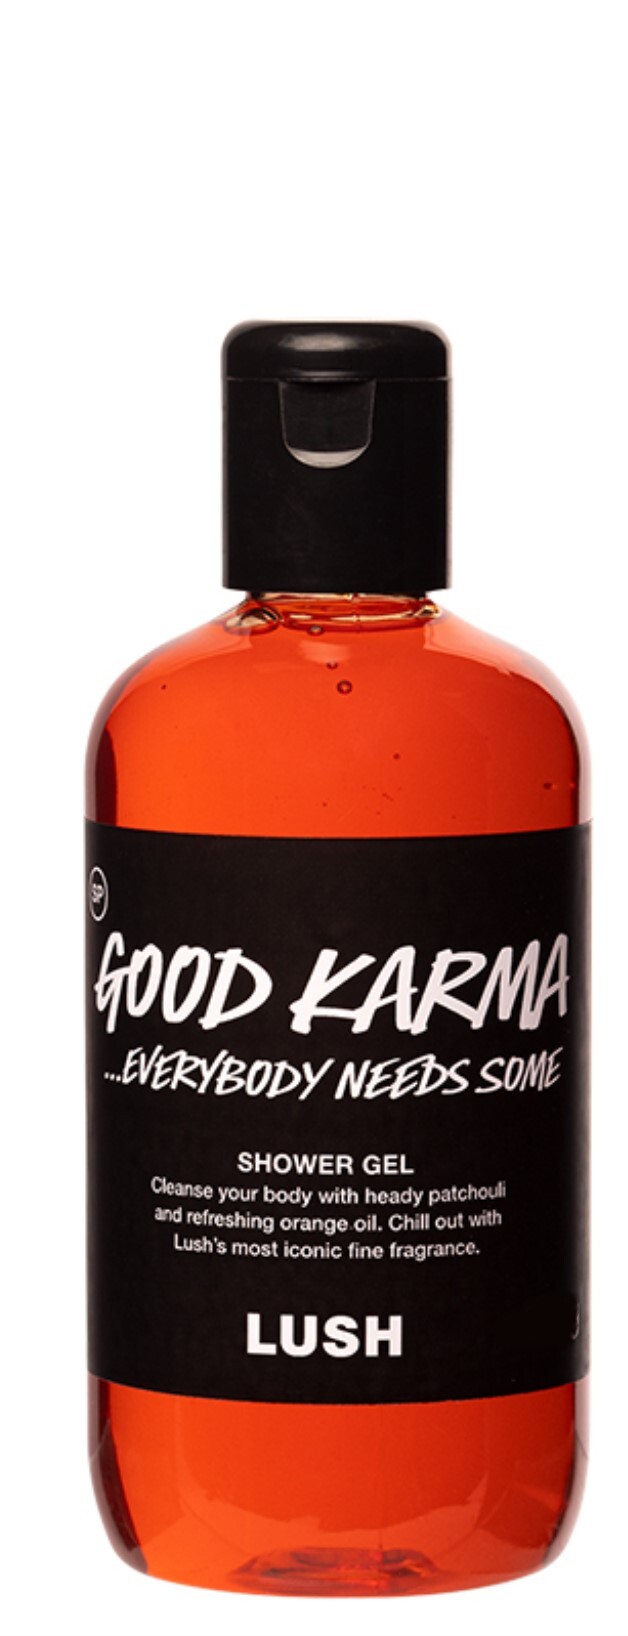 LUSH Гель для душа Good Karma...everybody needs some 120г